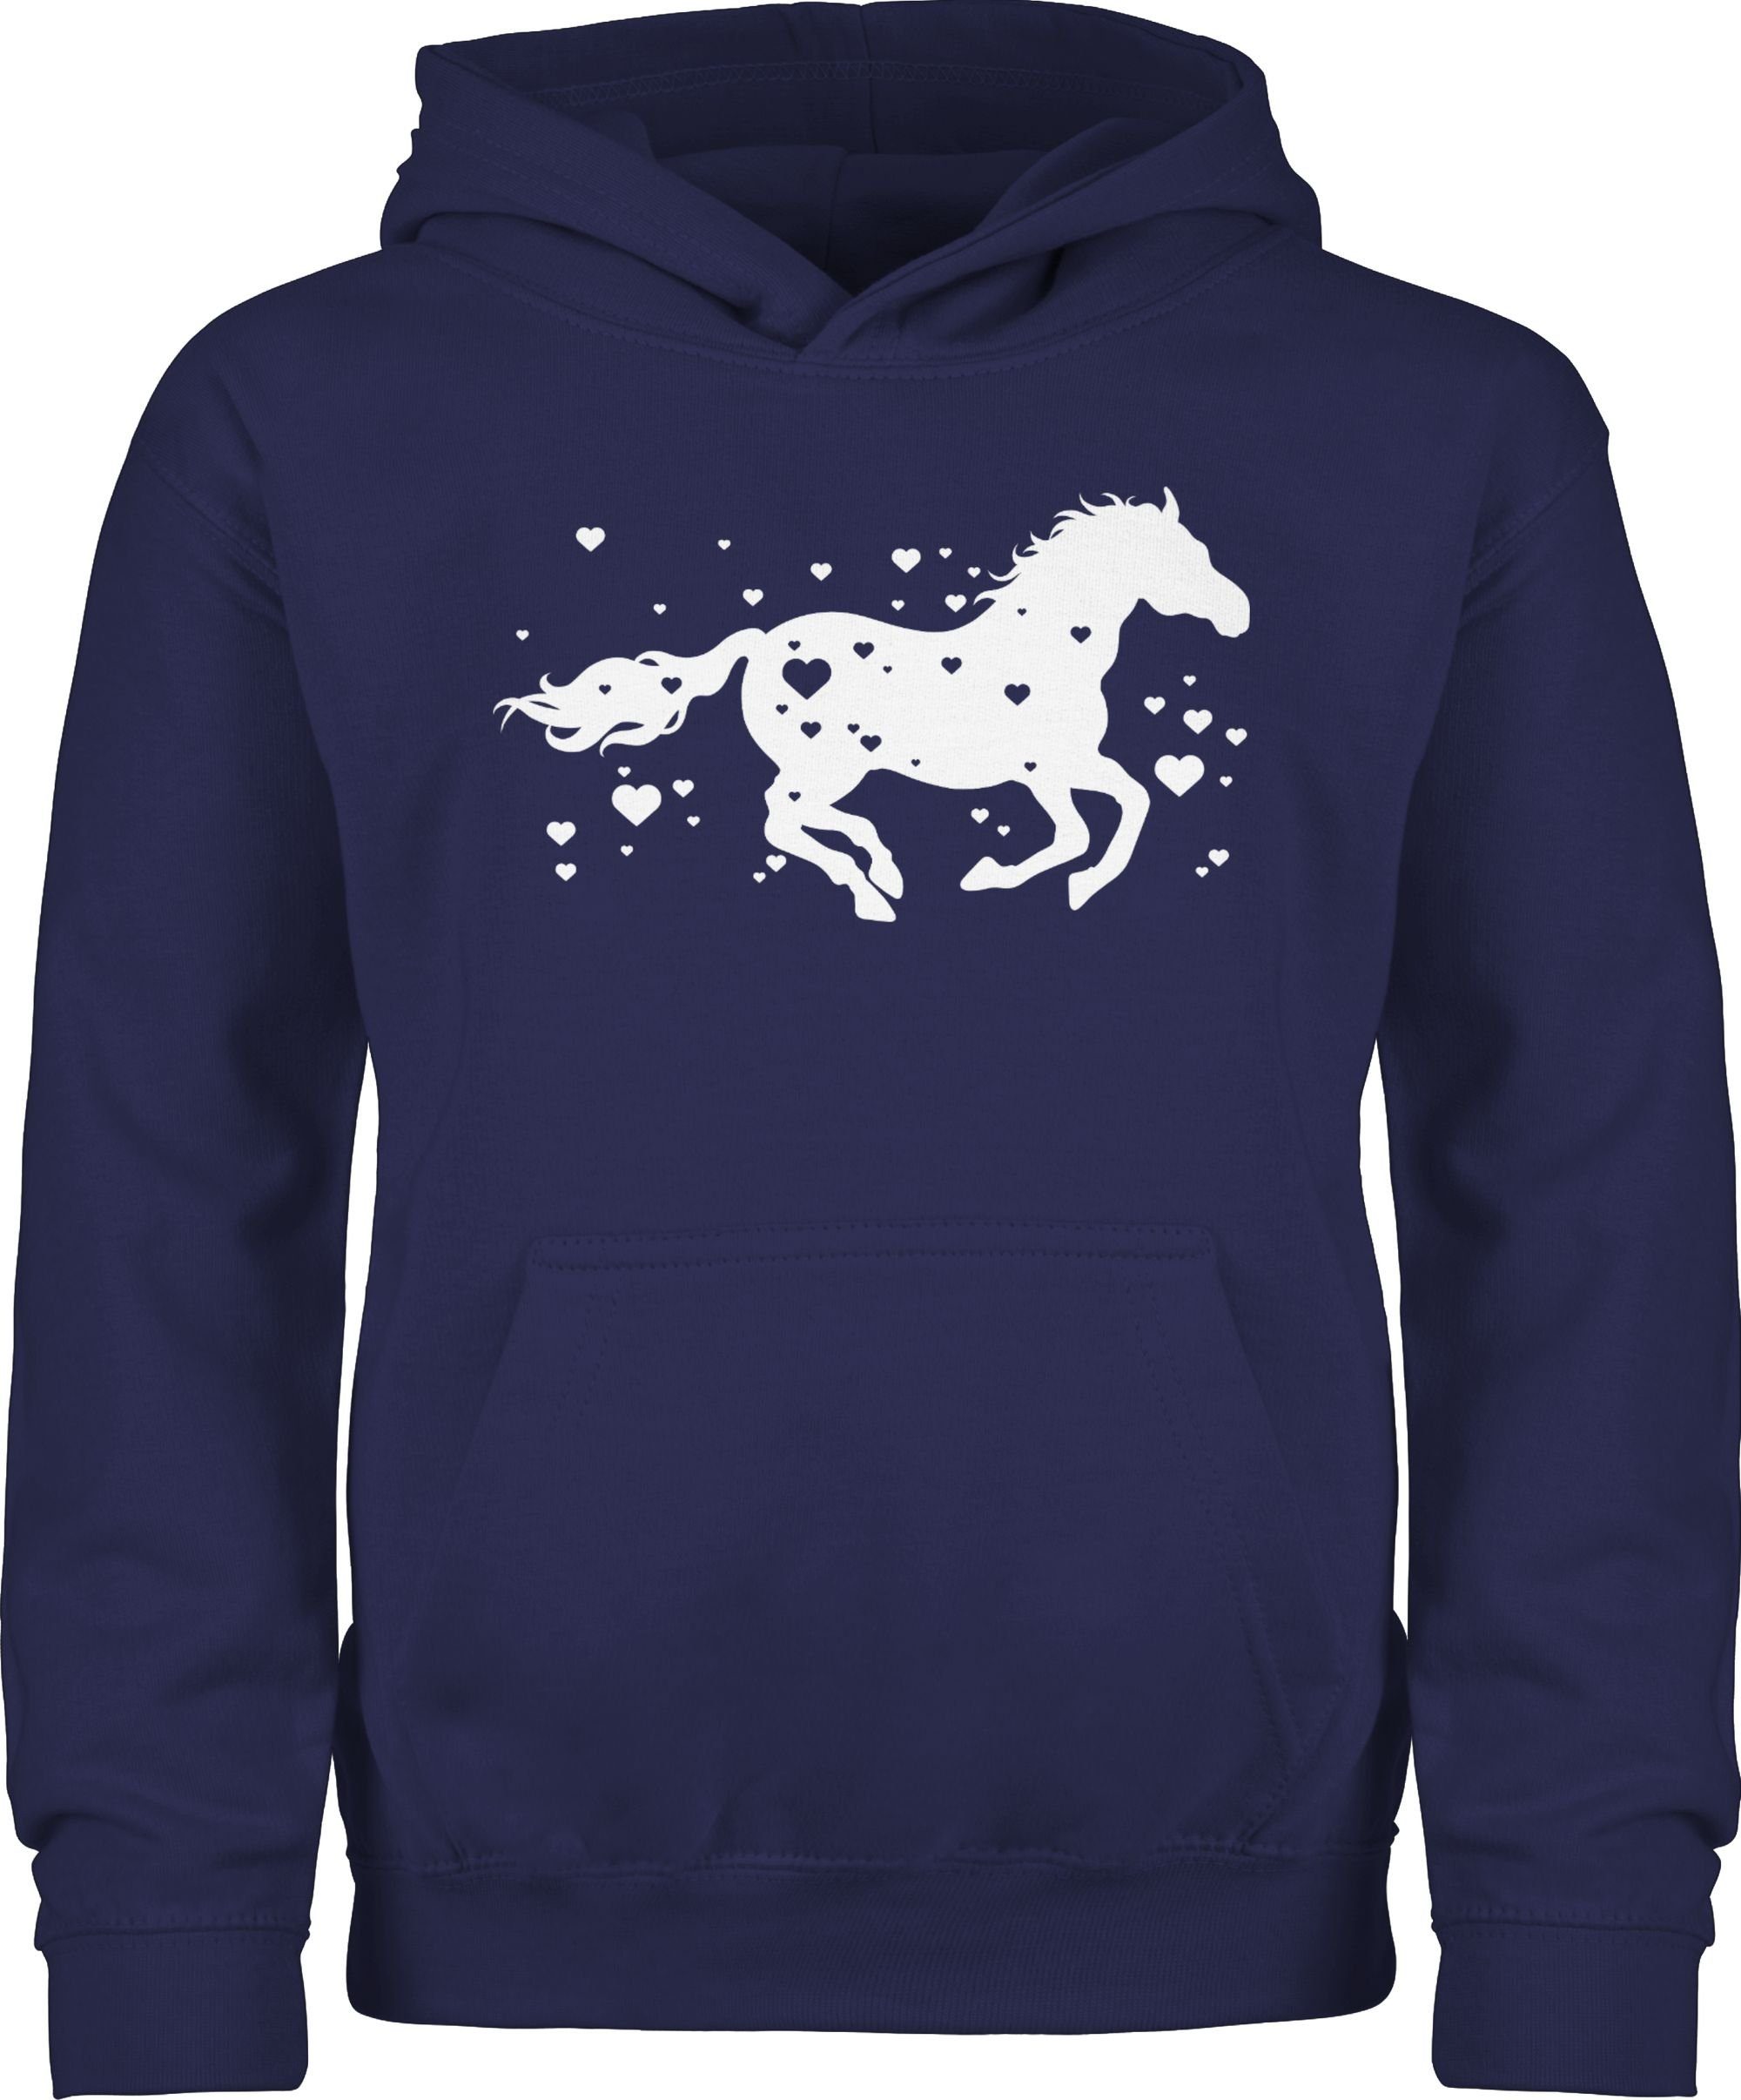 Shirtracer Hoodie Pferd mit Herzen - Pferde Horse Reiter Reiterin Pferdeliebhaber Gesche Pferd 2 Navy Blau